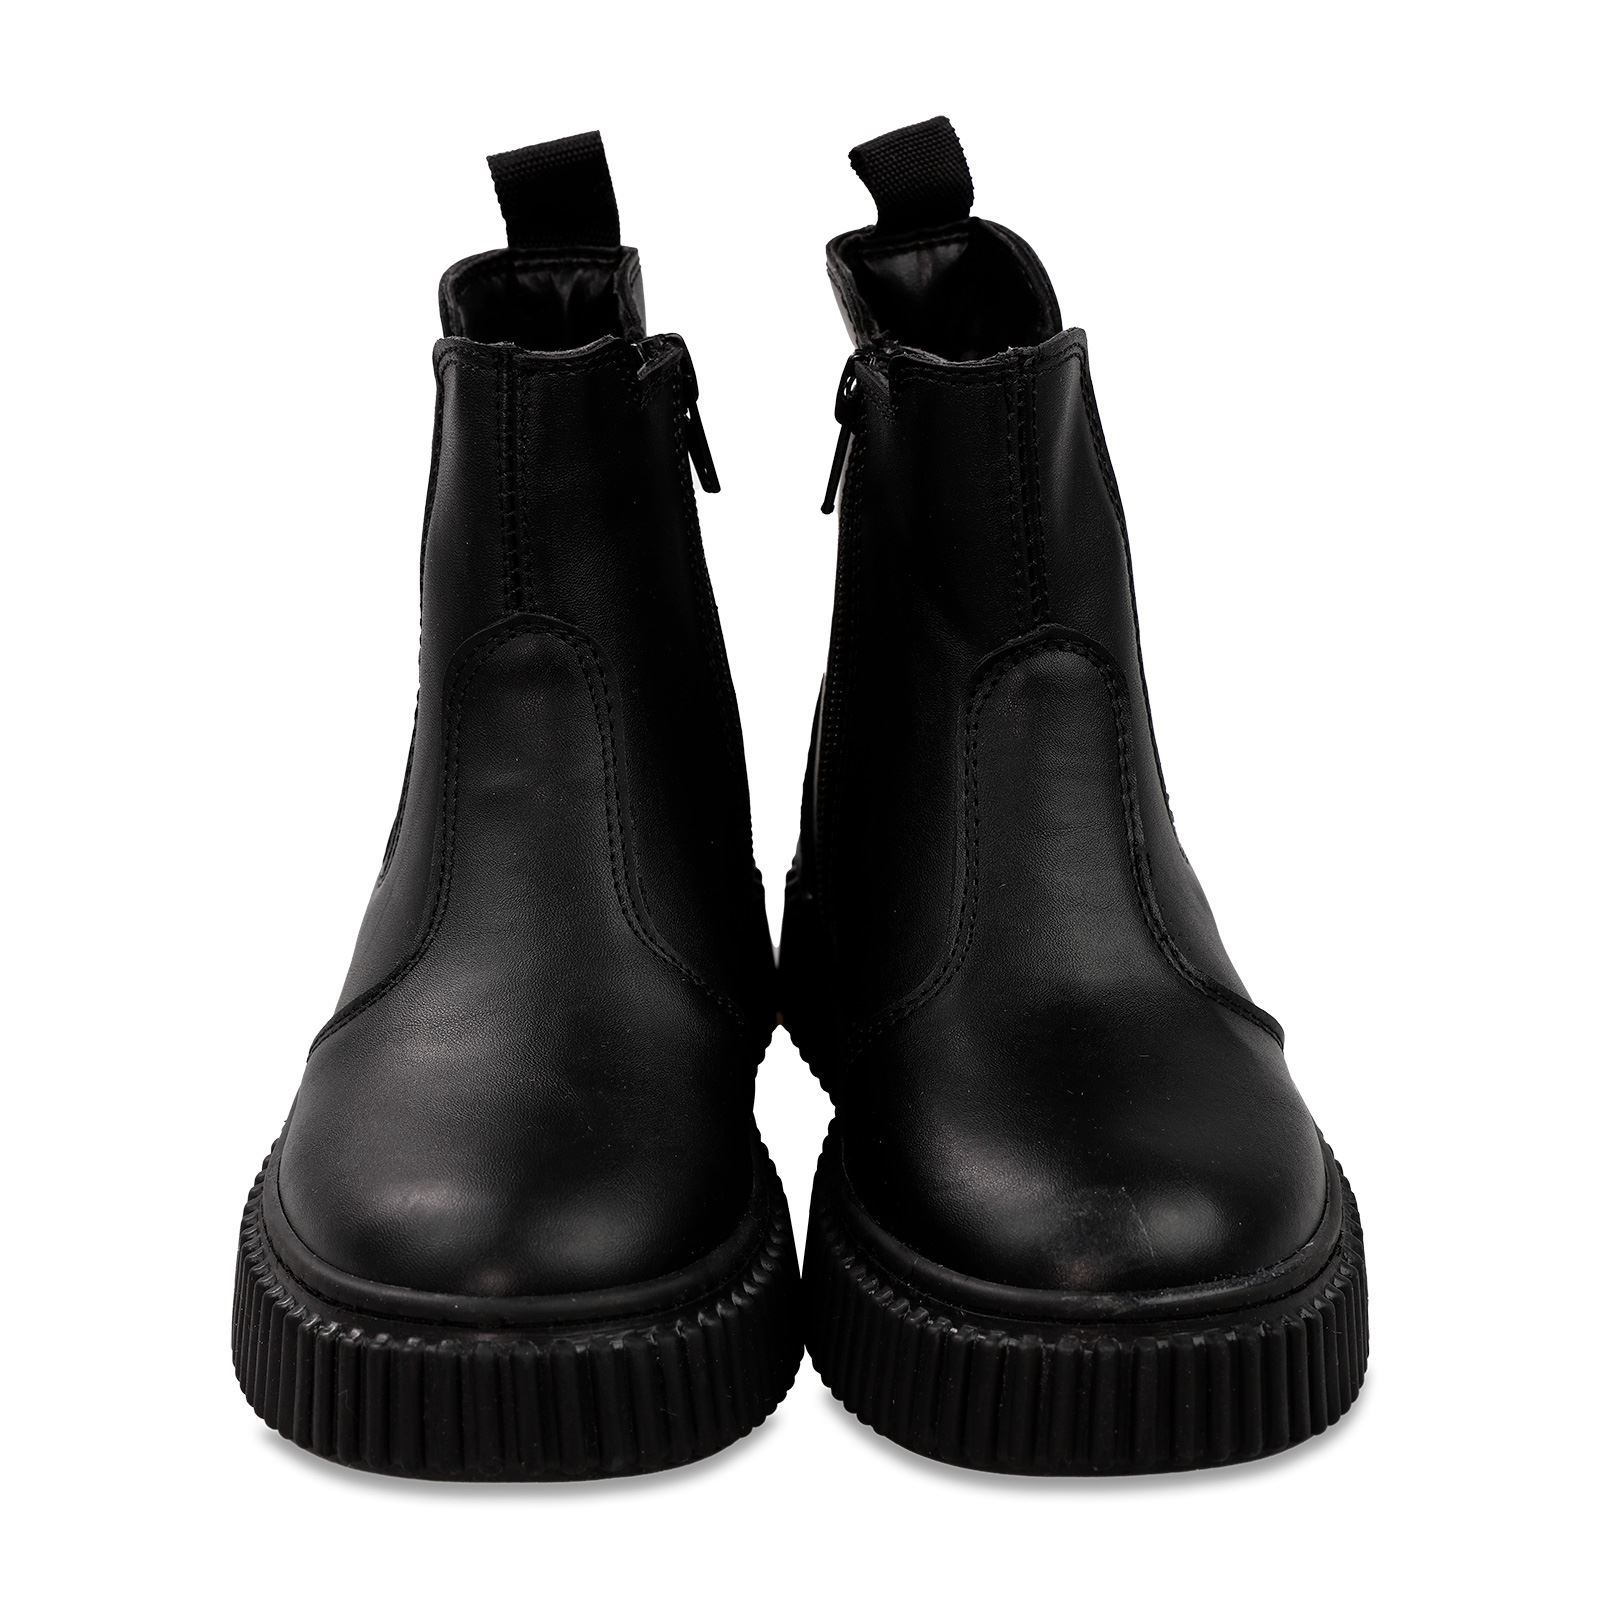 Civil Boots Erkek Çocuk Bot 31-35 Numara  Siyah